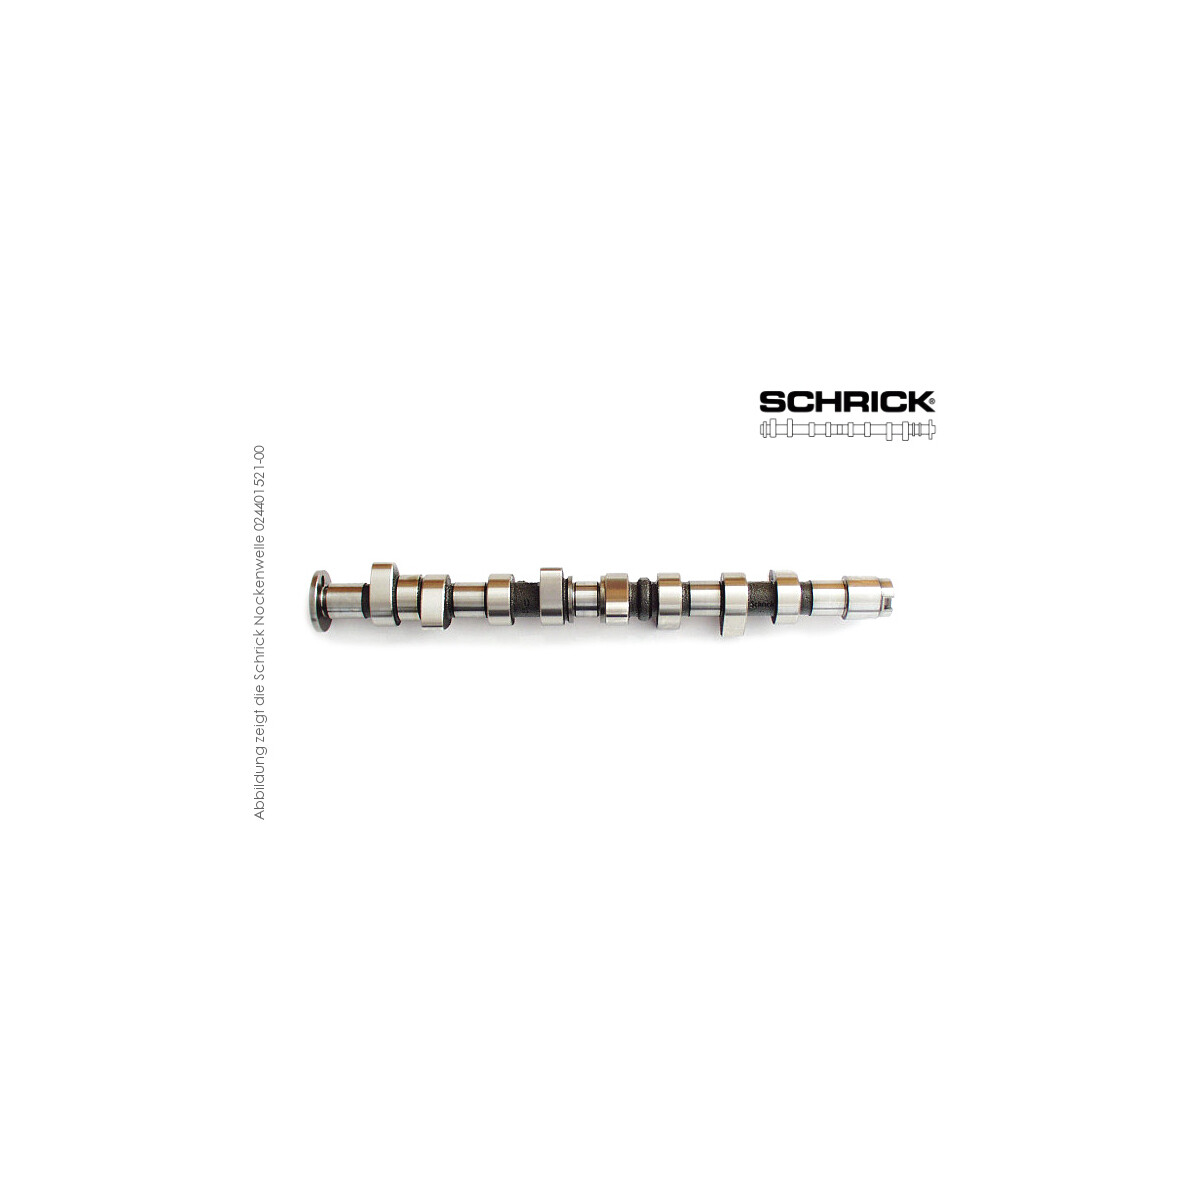 Schrick Nockenwelle für Audi 80, 90 | 1,8-2,0L 16V 4-Zyl. , 16V | 284° Auslassnockenwelle (Schrick 0220A1840-03)